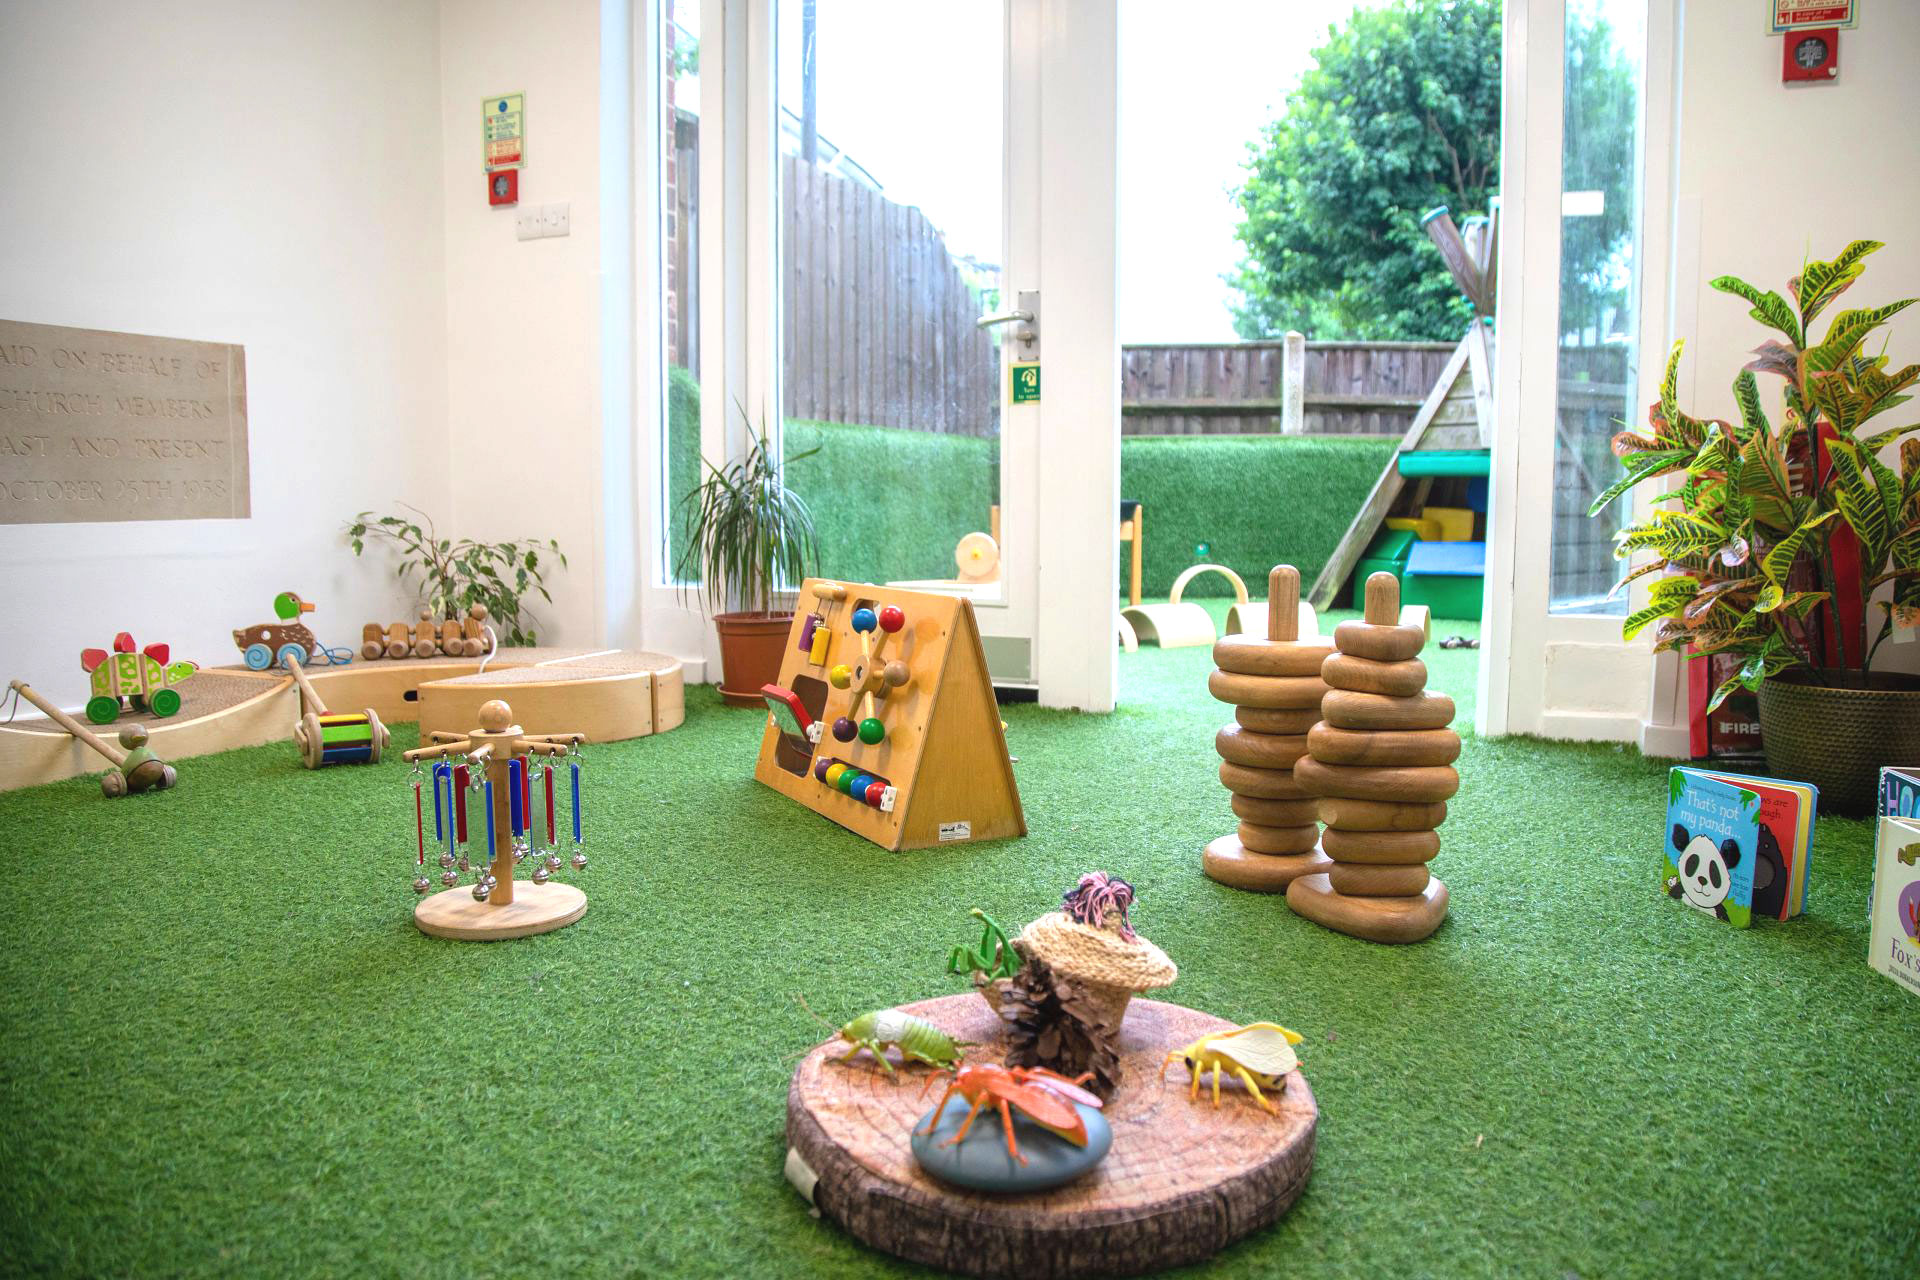 West Norwood Day Nursery and Preschool baby garden